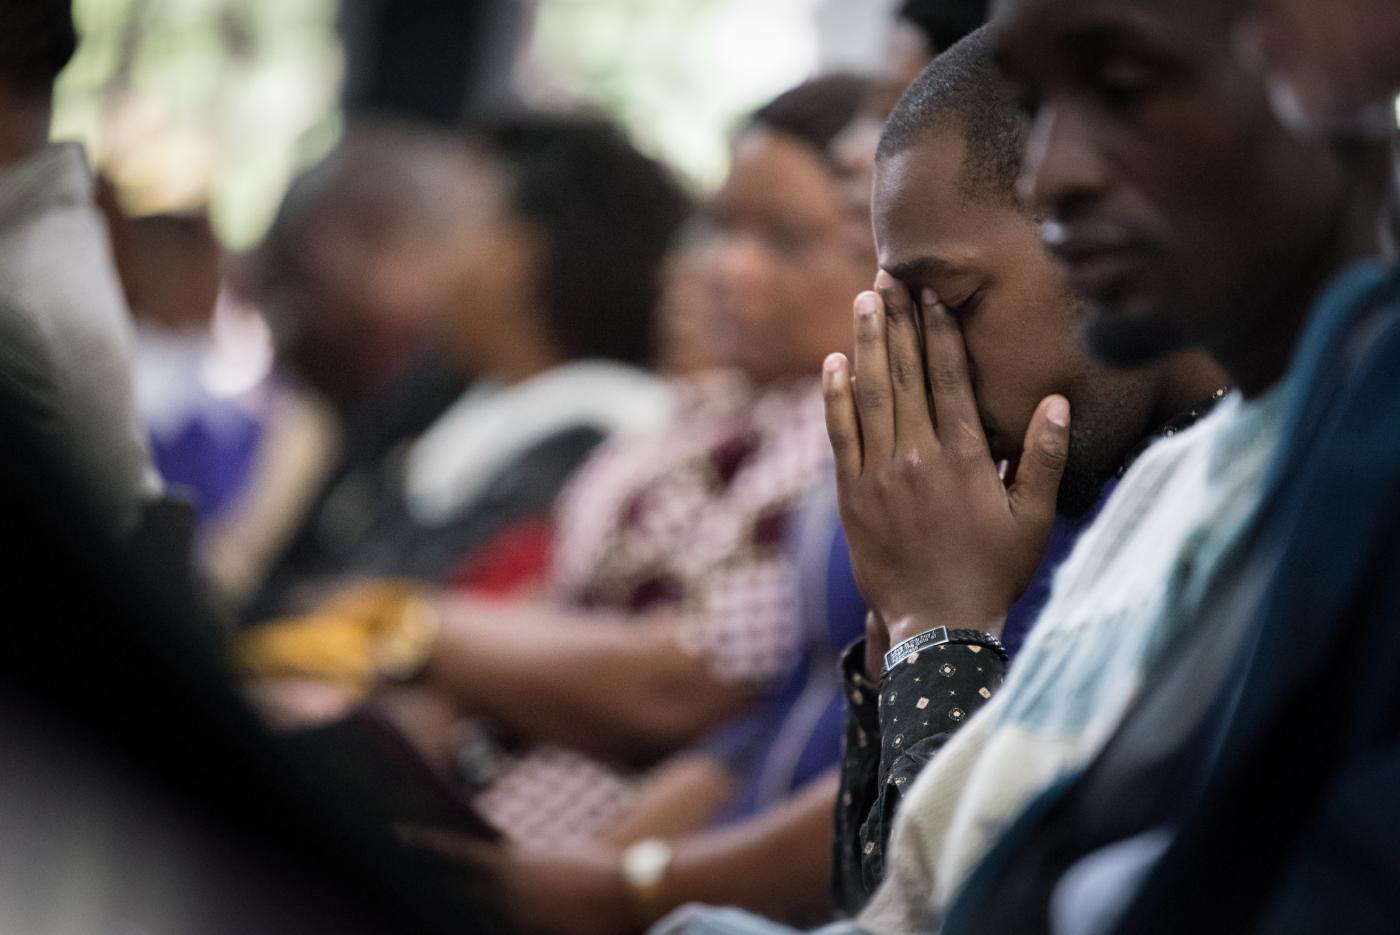 People praying at a Church service